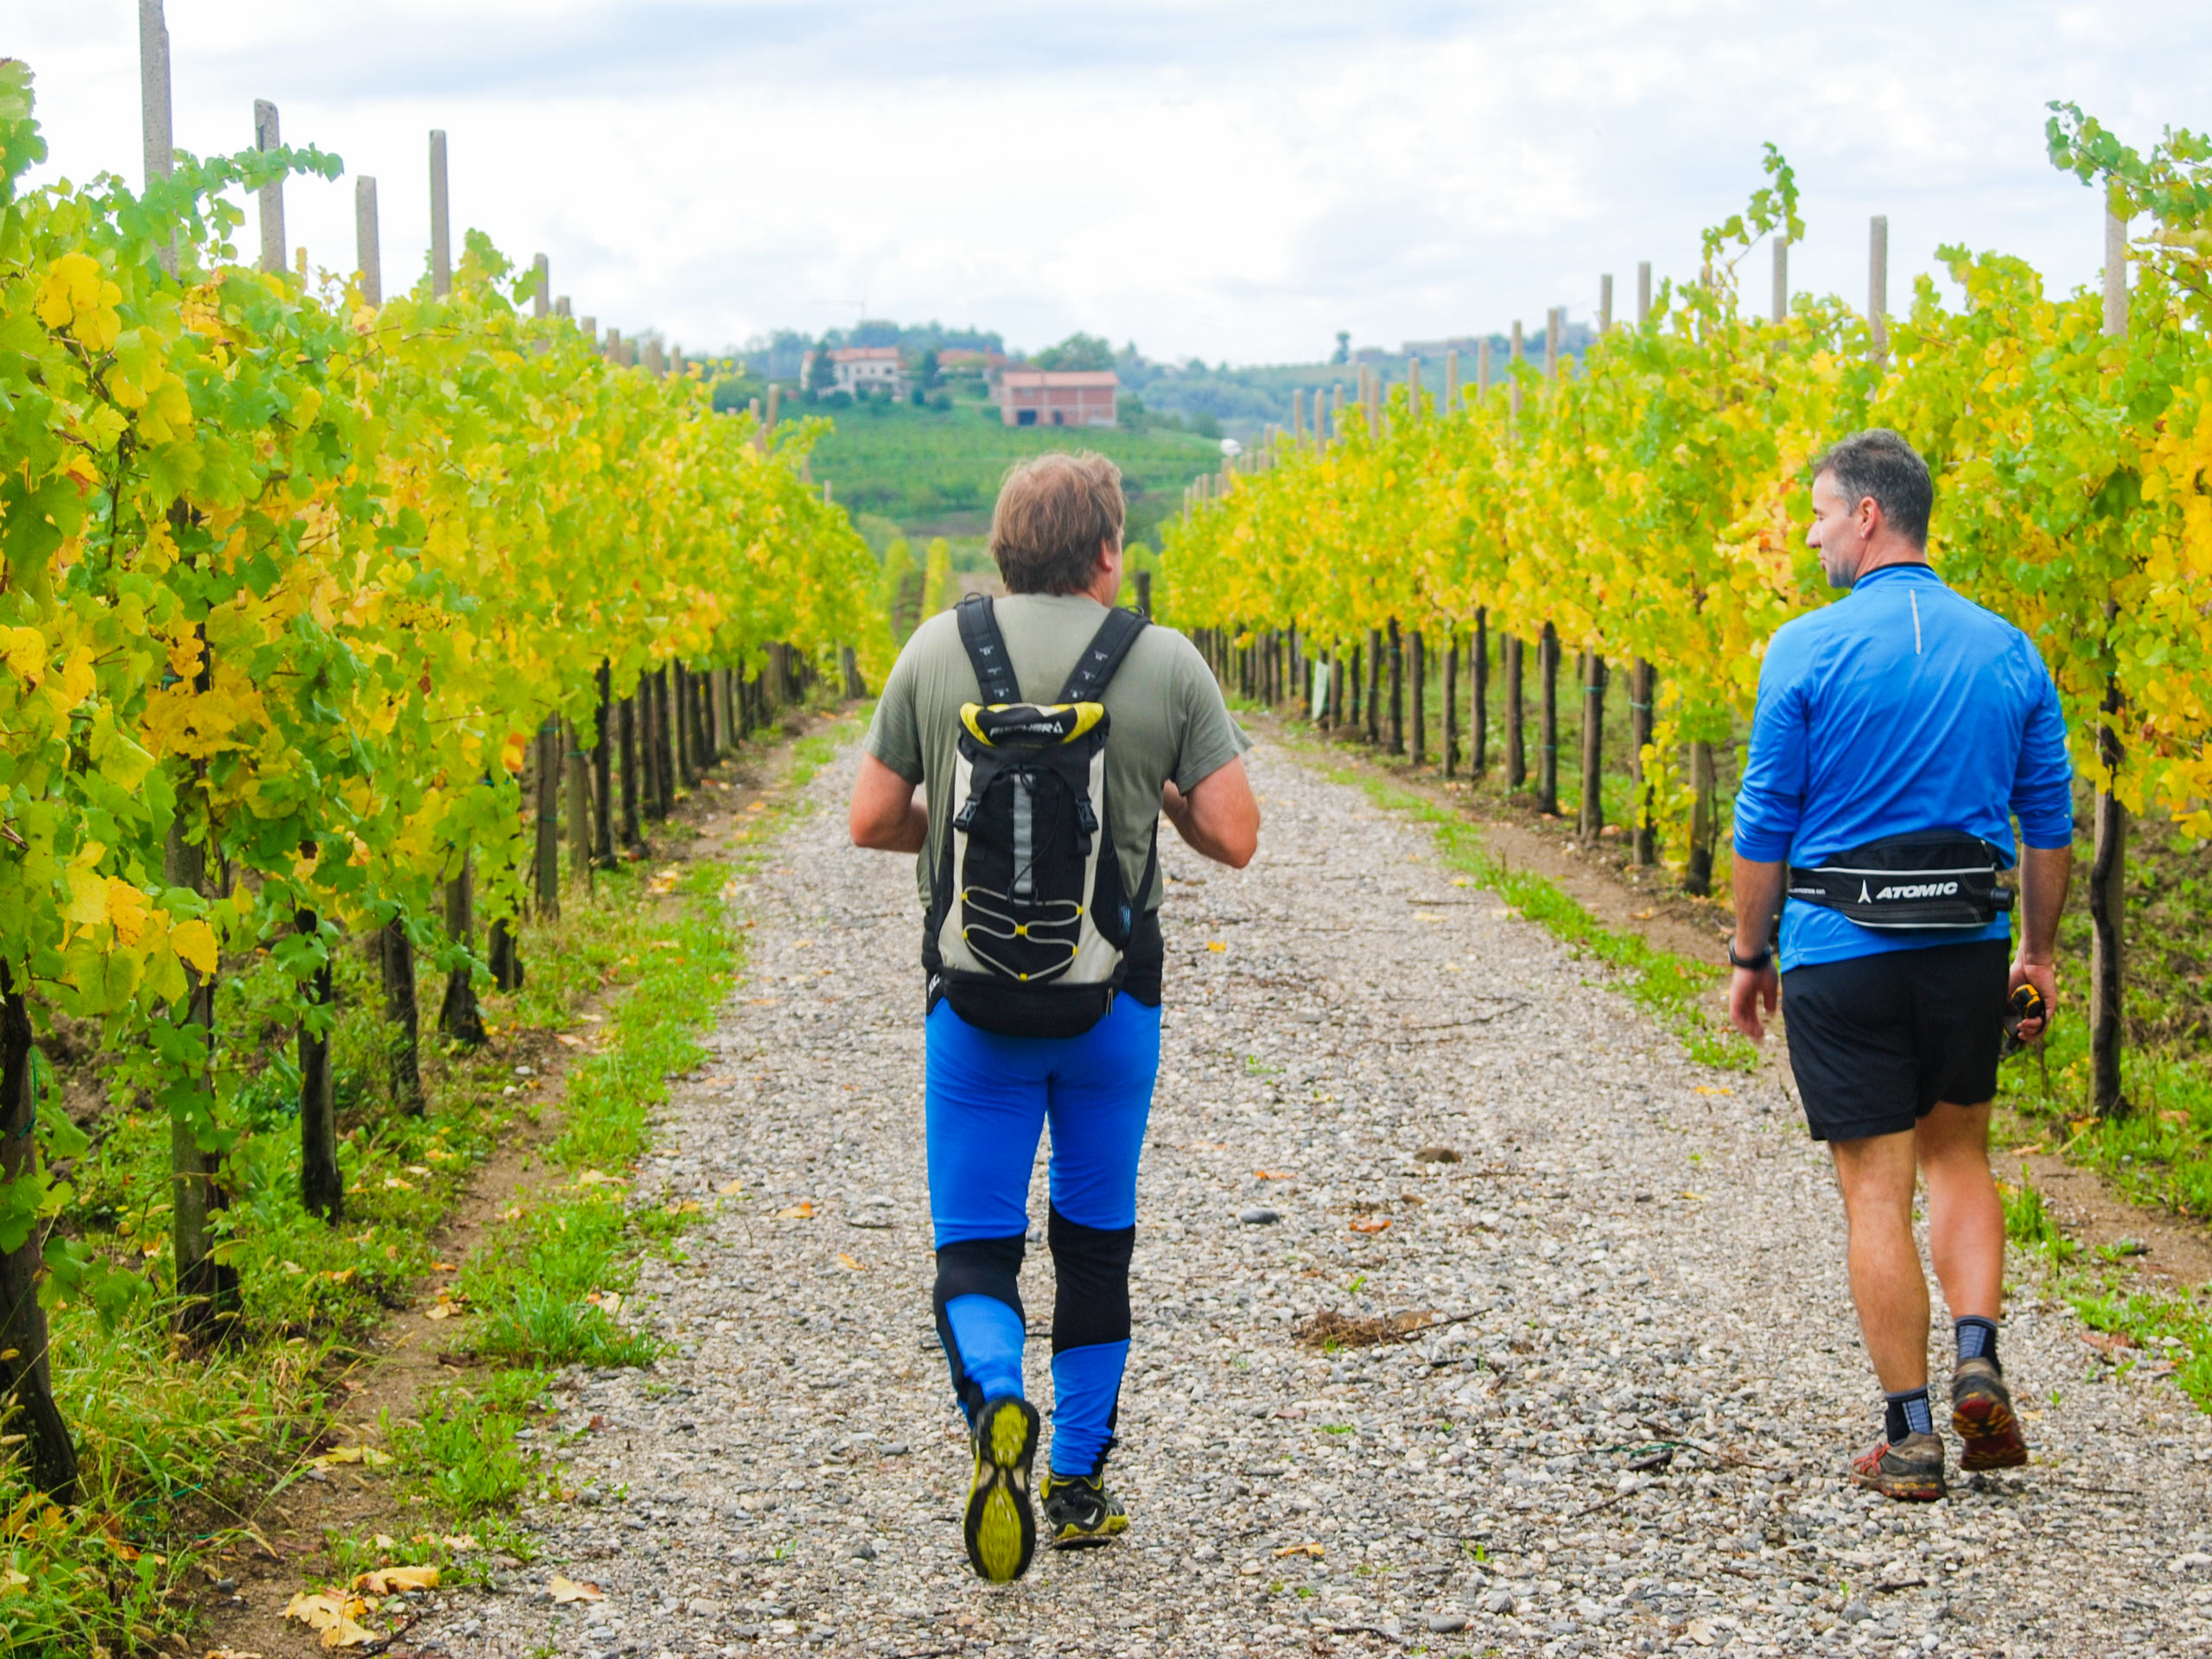 Italy vineyard hiking